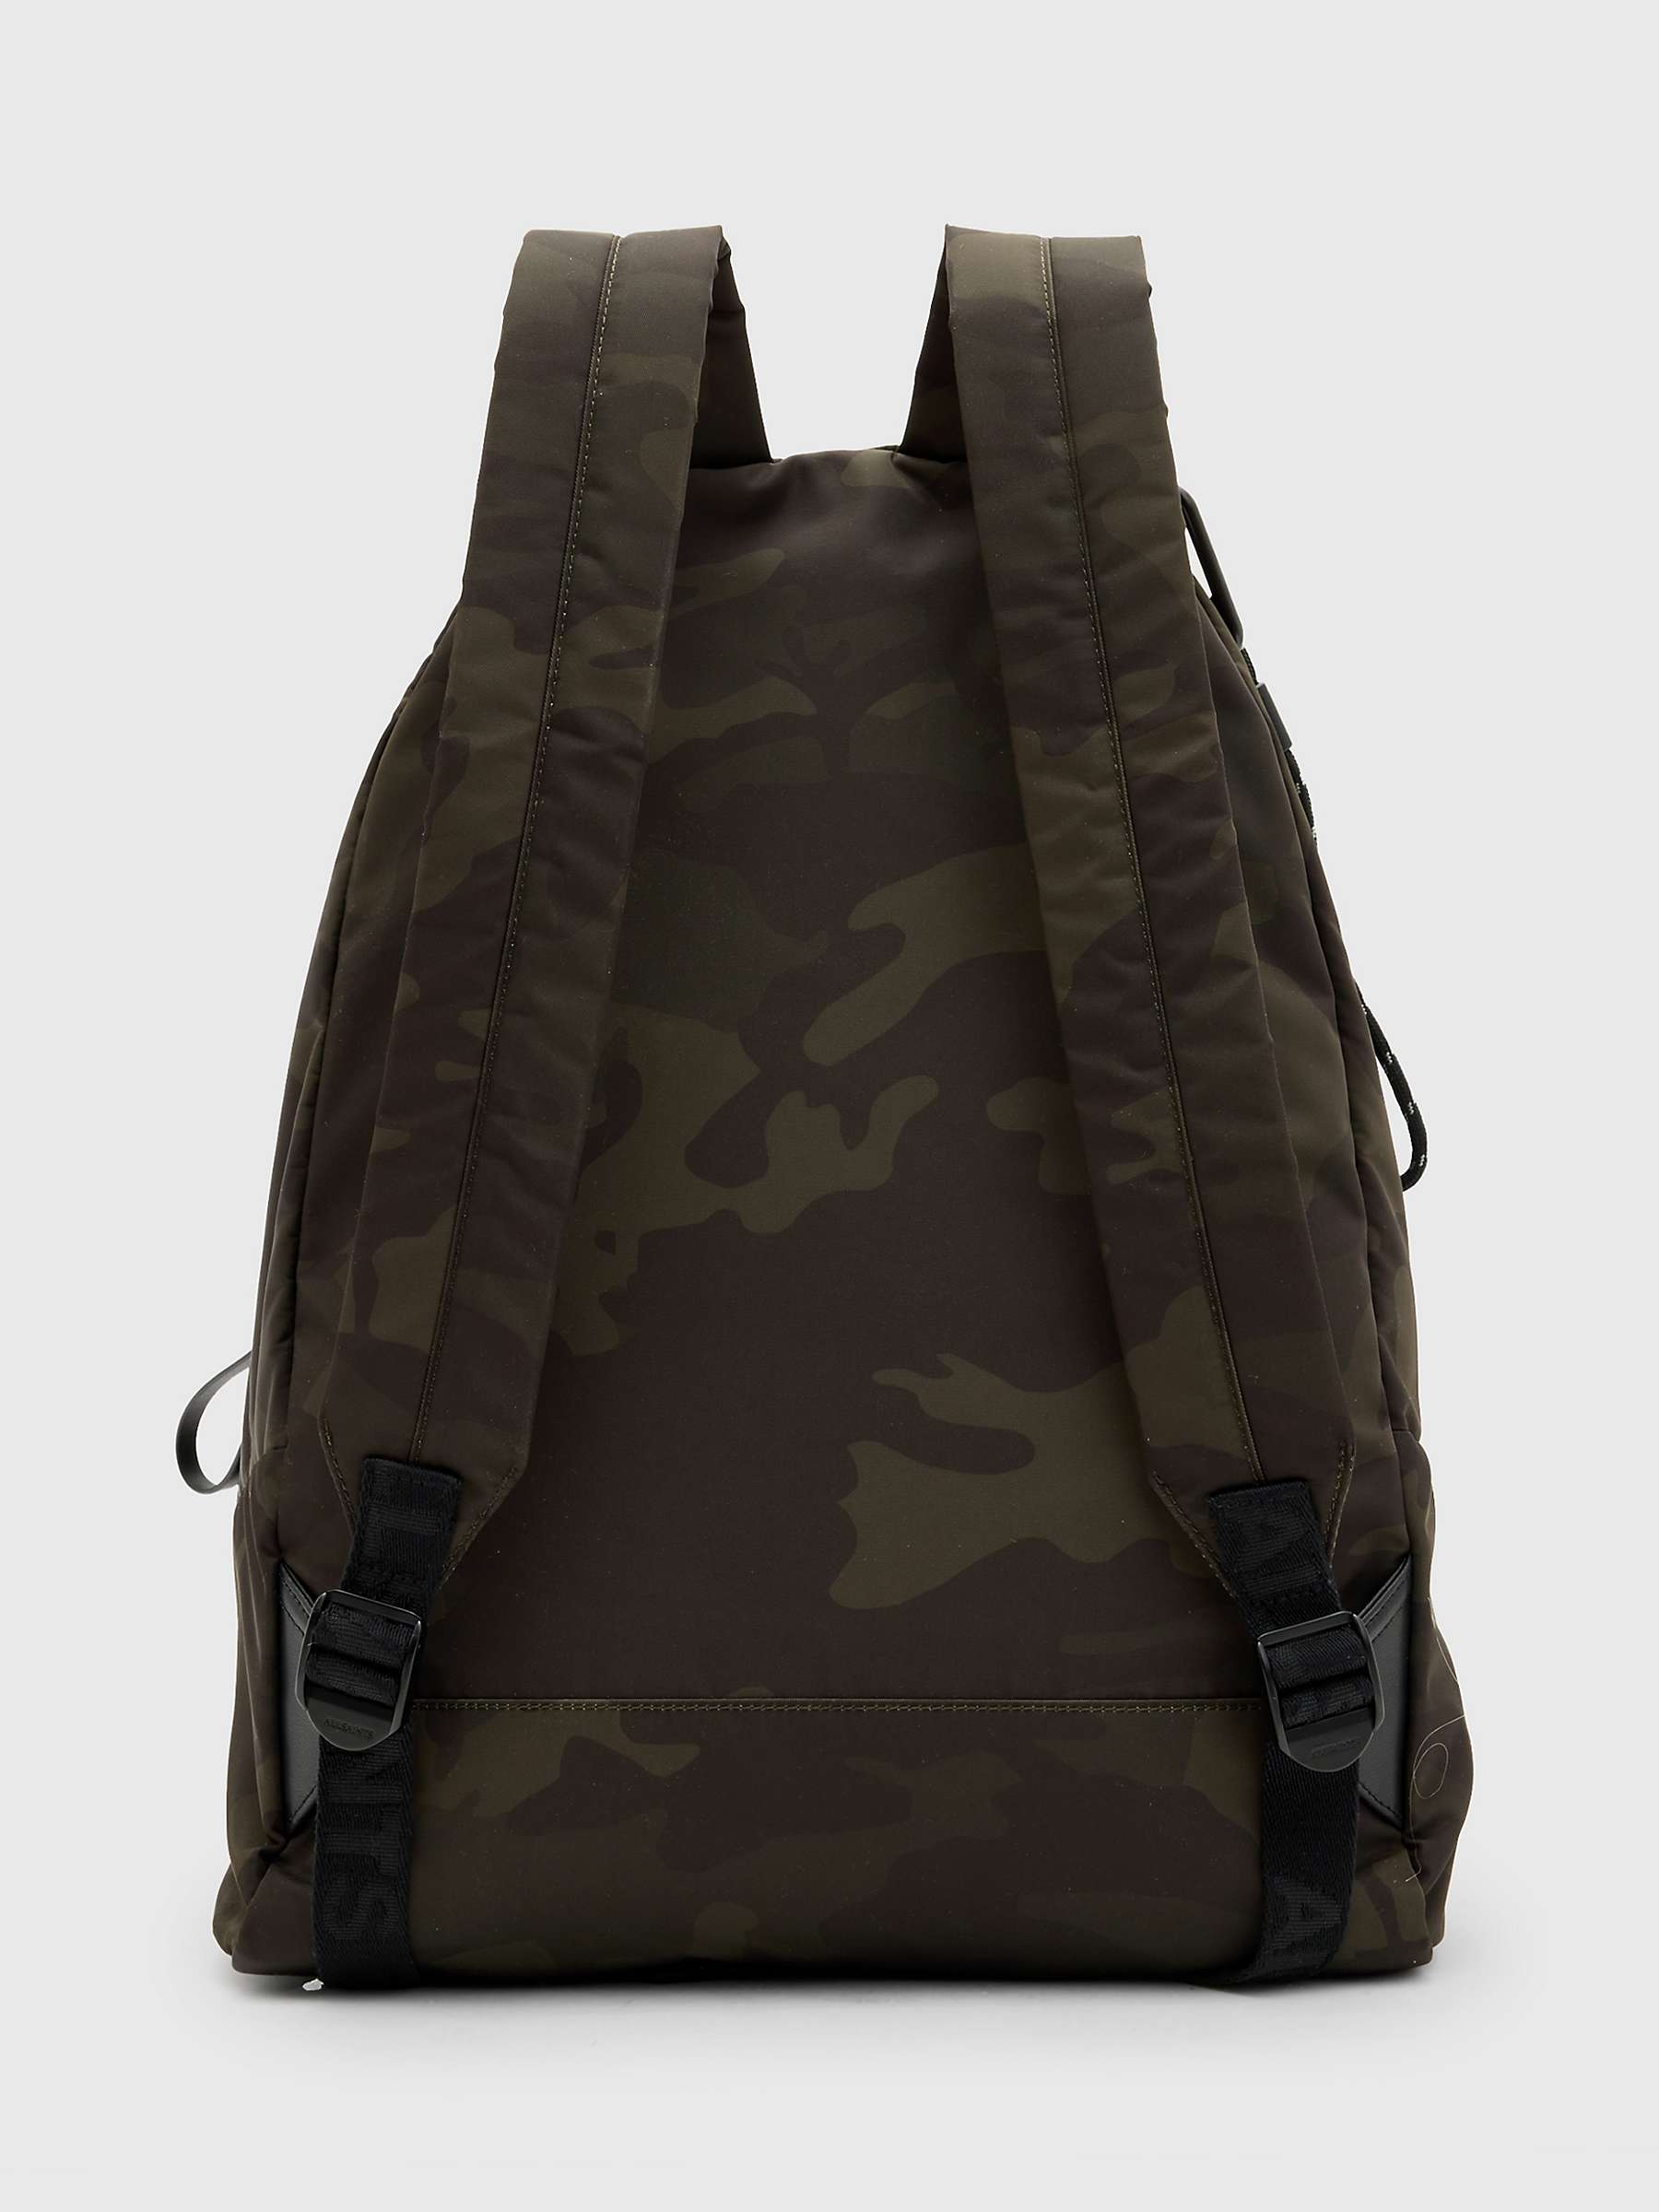 Buy AllSaints Carabiner Backpack, Camo Online at johnlewis.com